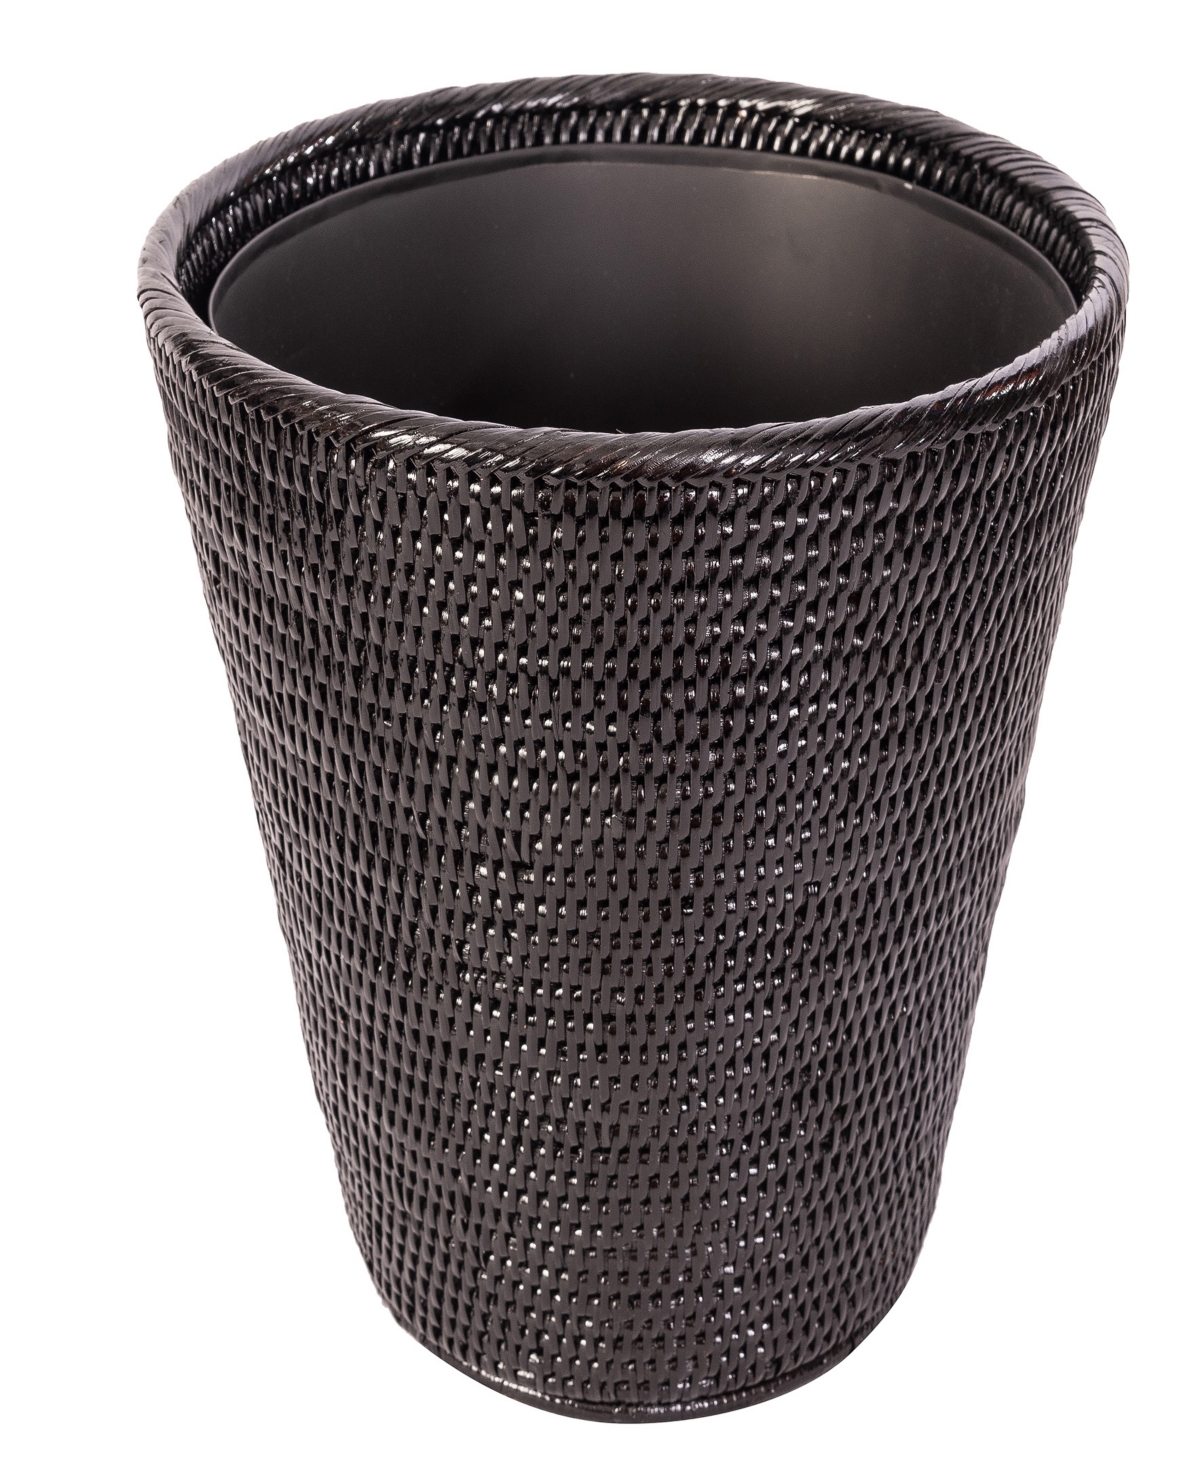 Rattan Round Tapered Waste Basket with Metal Liner - Tudor Black